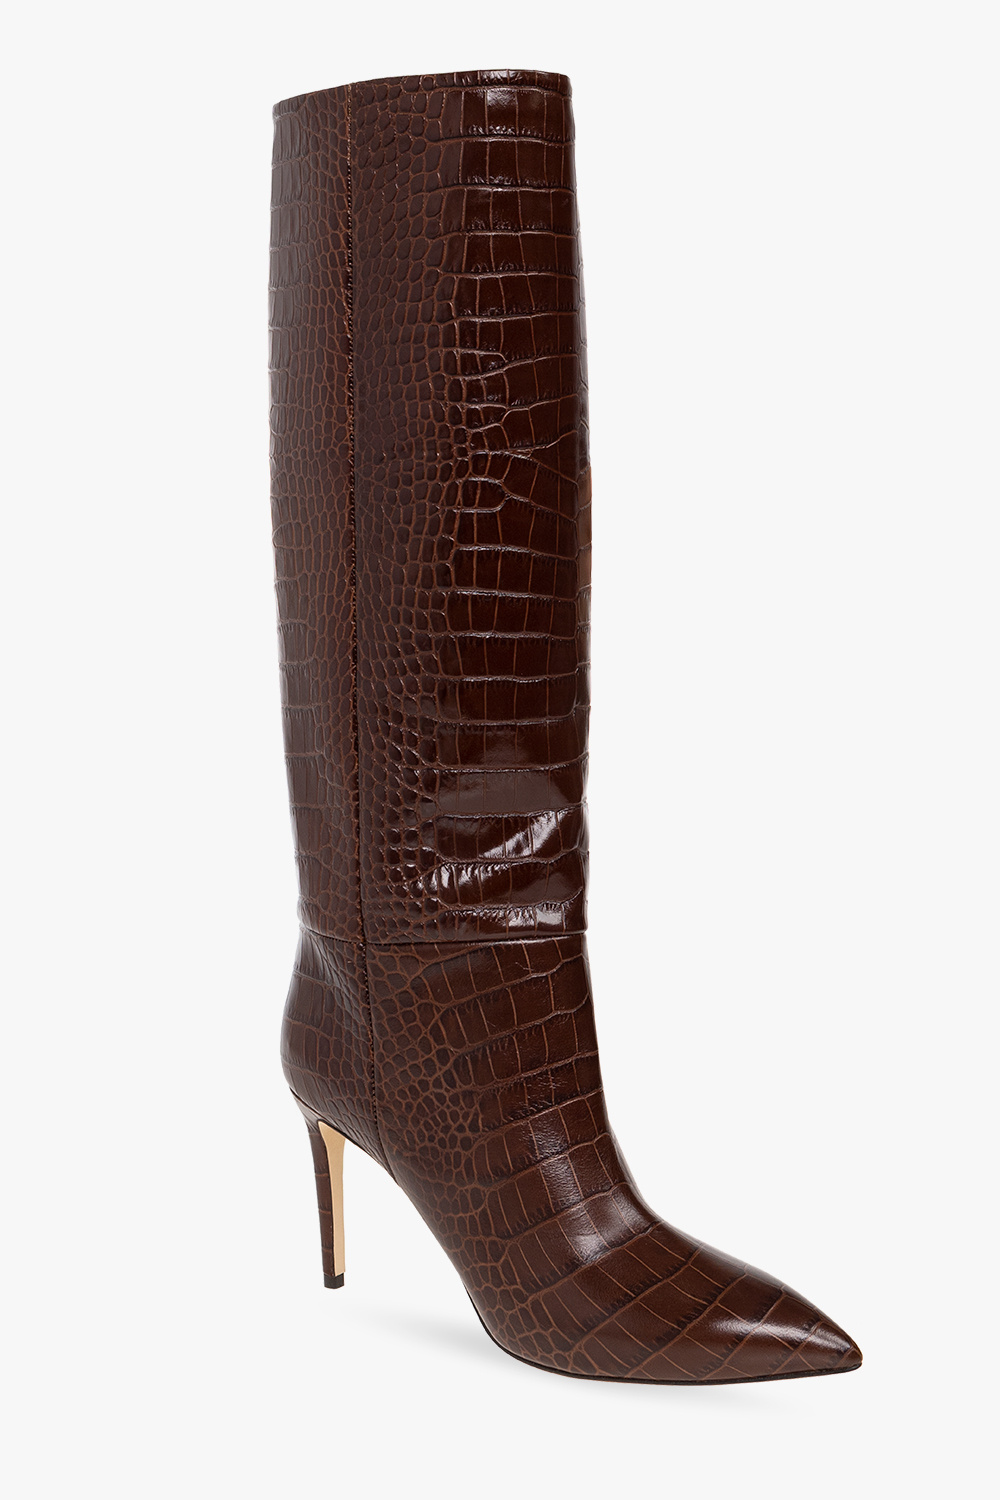 Paris Texas Leather heeled knee-high travel